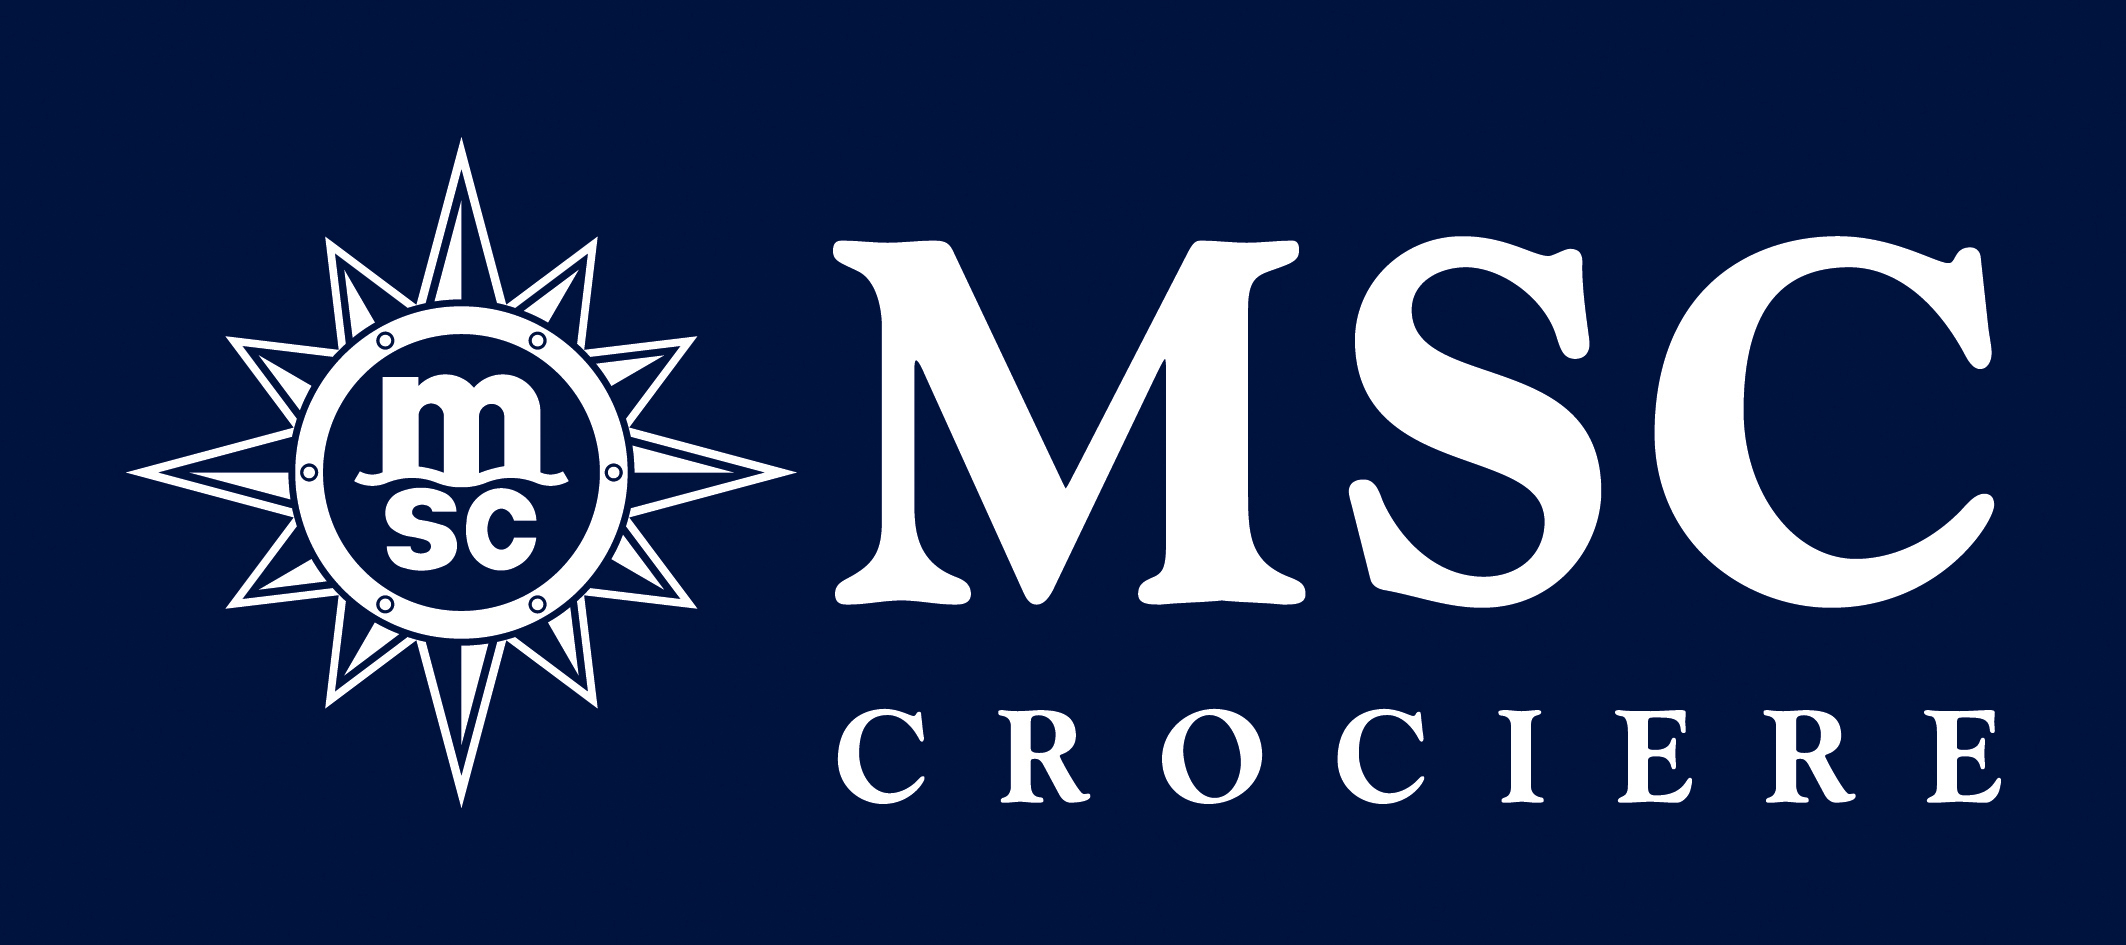 msc_logo_Logo_msc